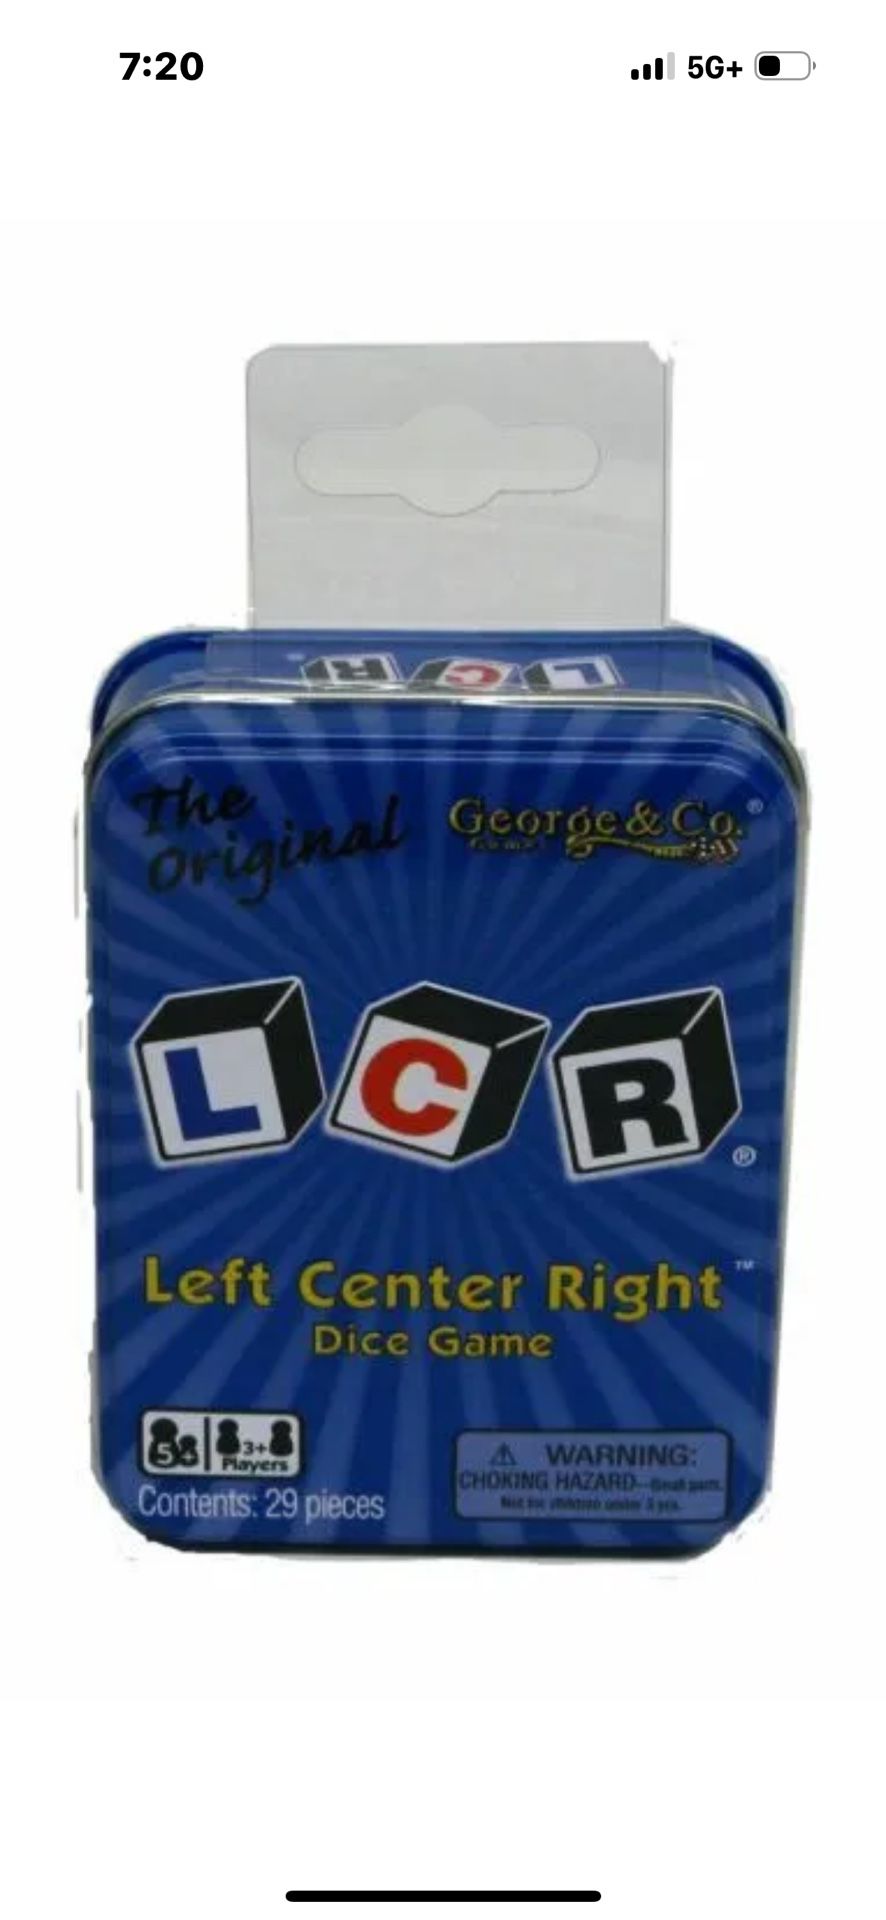 The Original LCR® Left Center Right